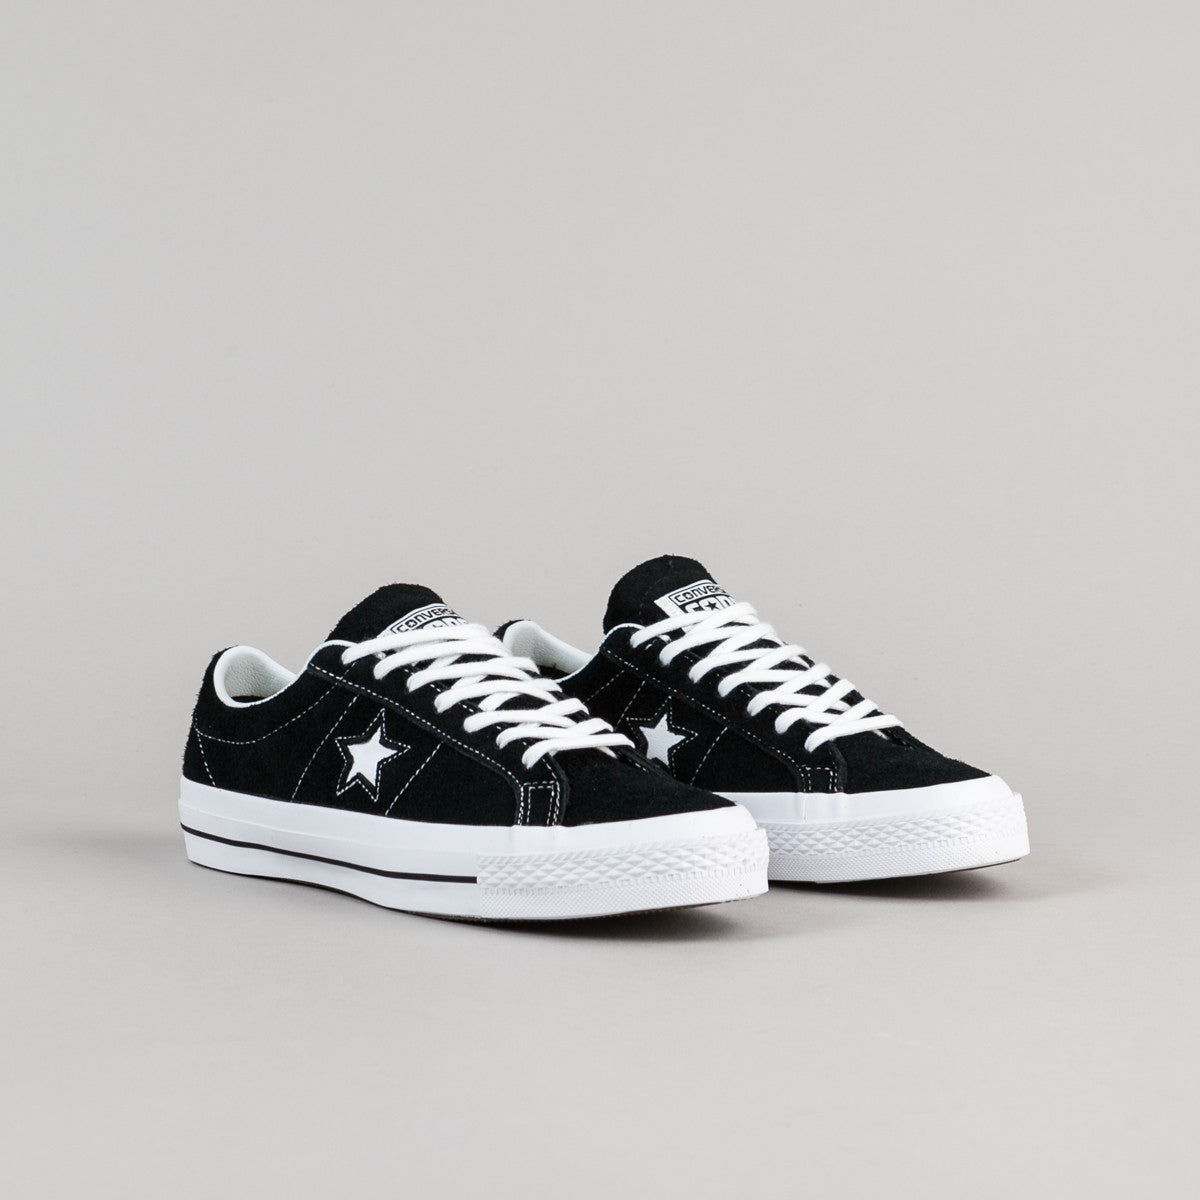 Converse One Star OX Shoes - Black / White / Gum | Flatspot